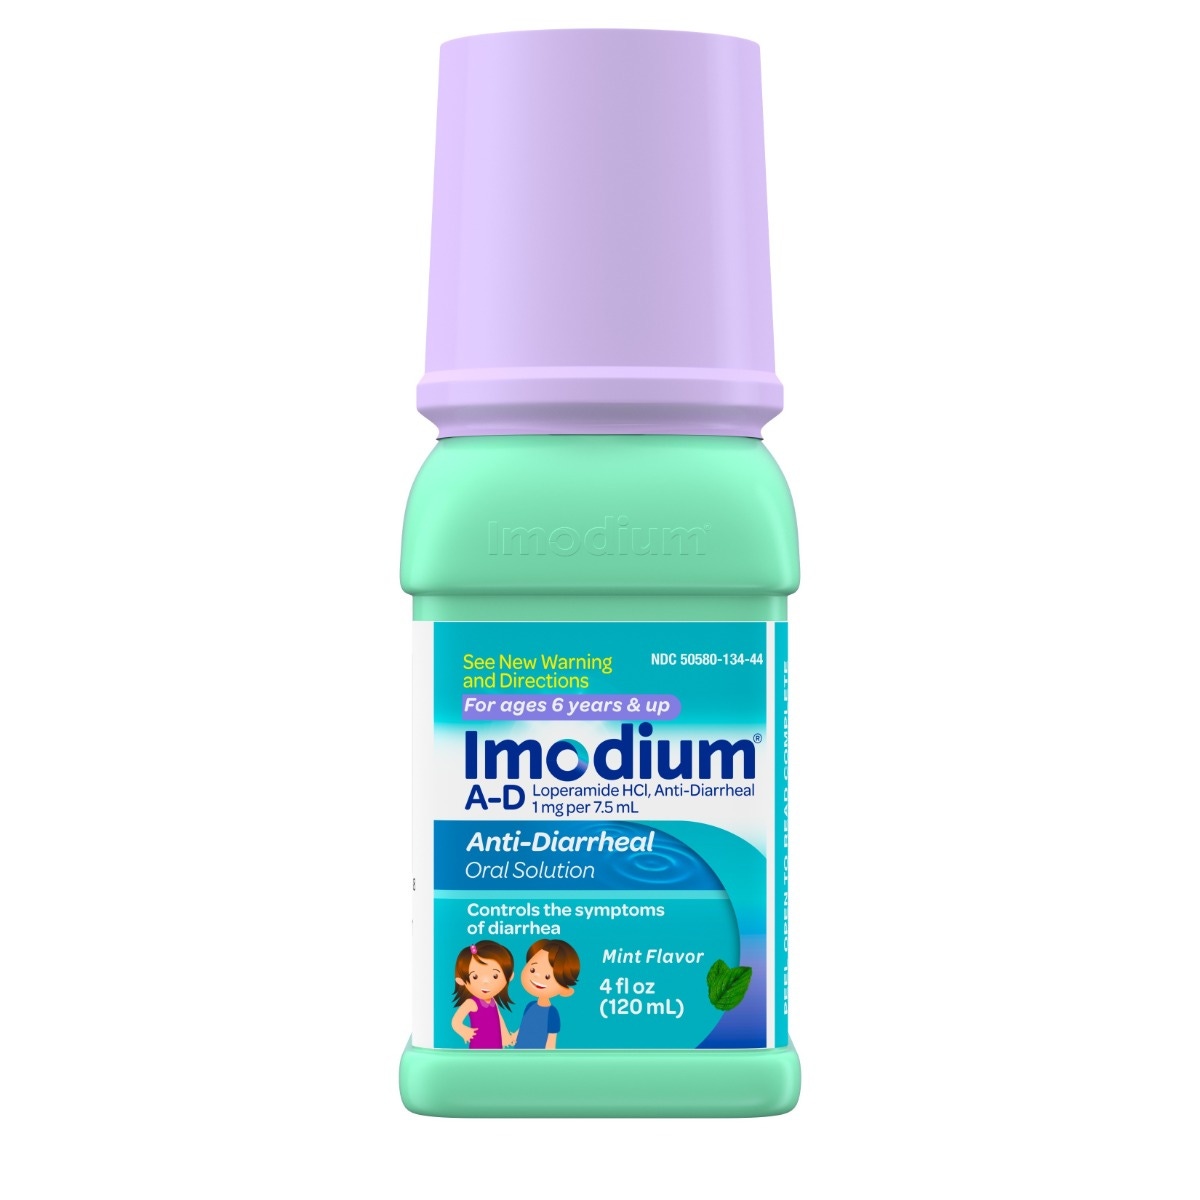 Imodium A-D Anti-Diarrheal